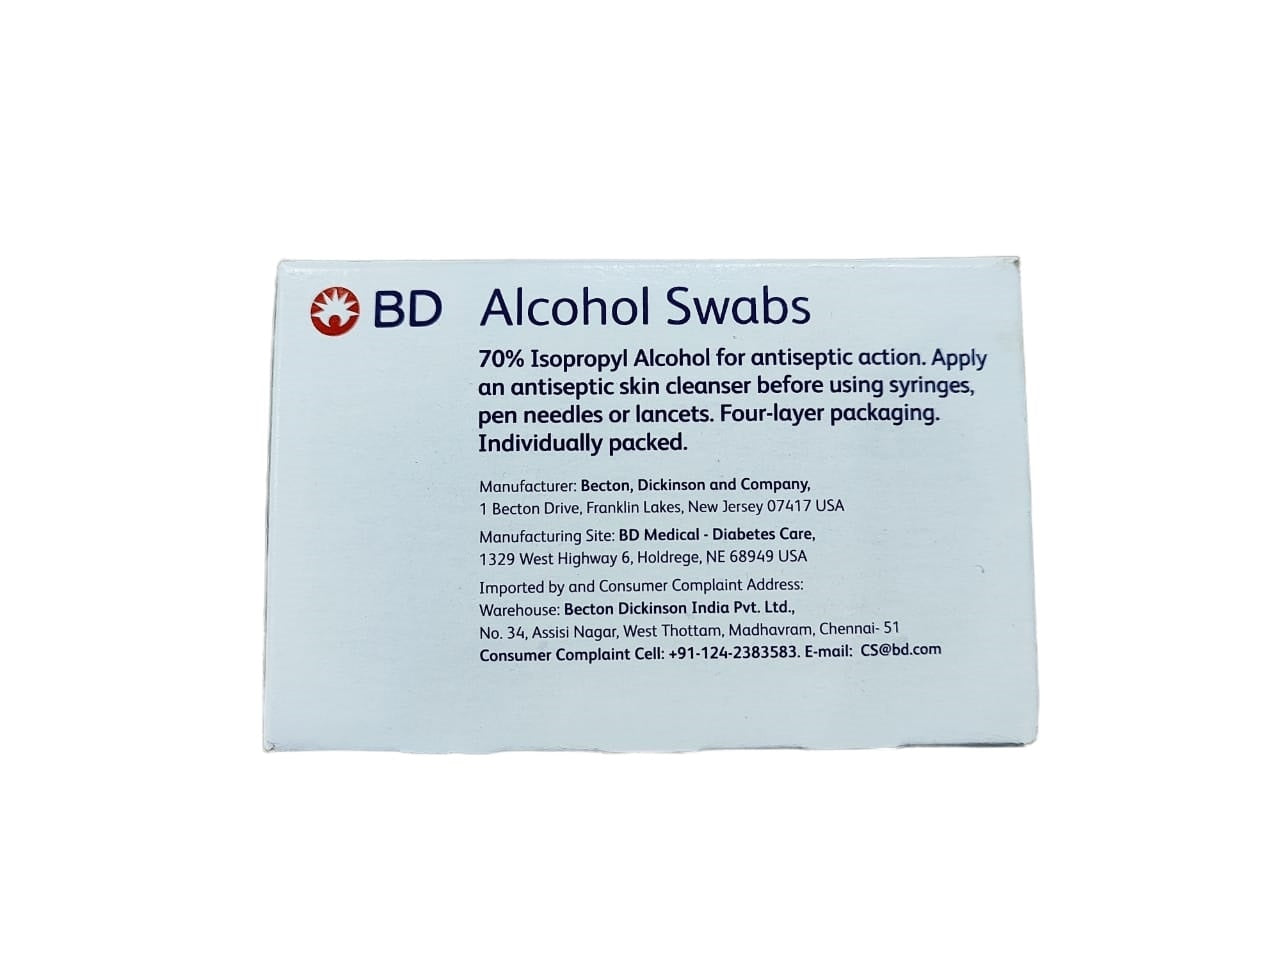 BD Alcohol Swabs (Isopropyl Alcohol 70%) 100 Units